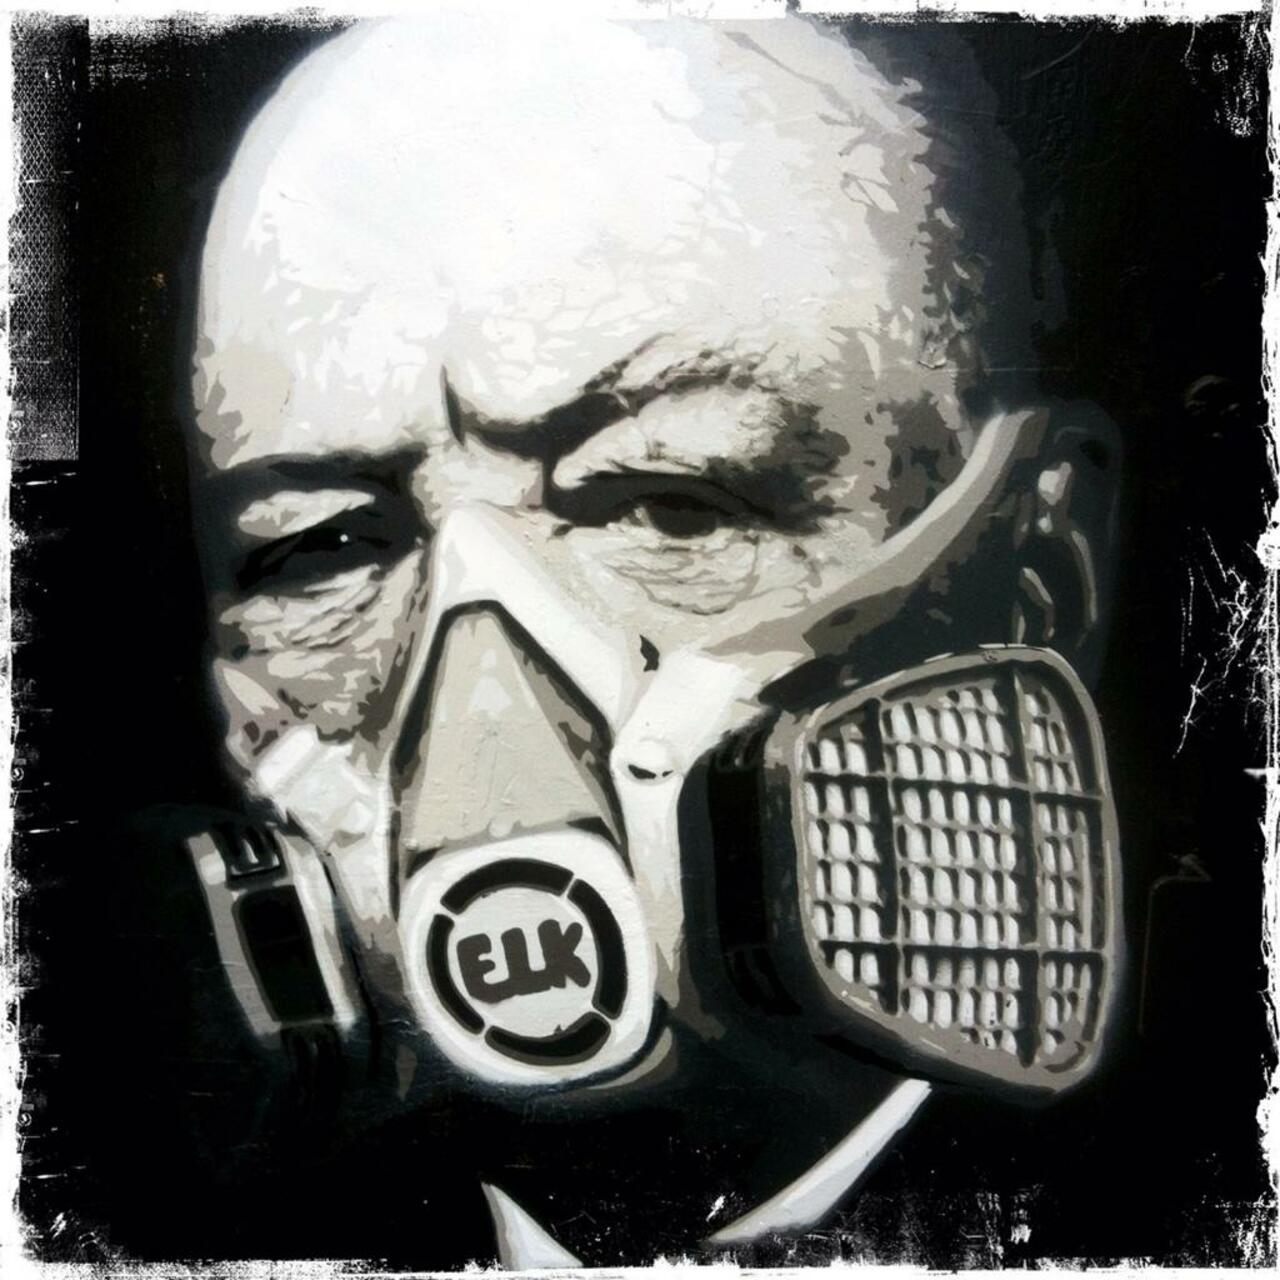 This has now been defaced - Winston Churchill by #ELK on Brick Lane 

#art #streetart #graffiti http://t.co/R44TUnBa2g